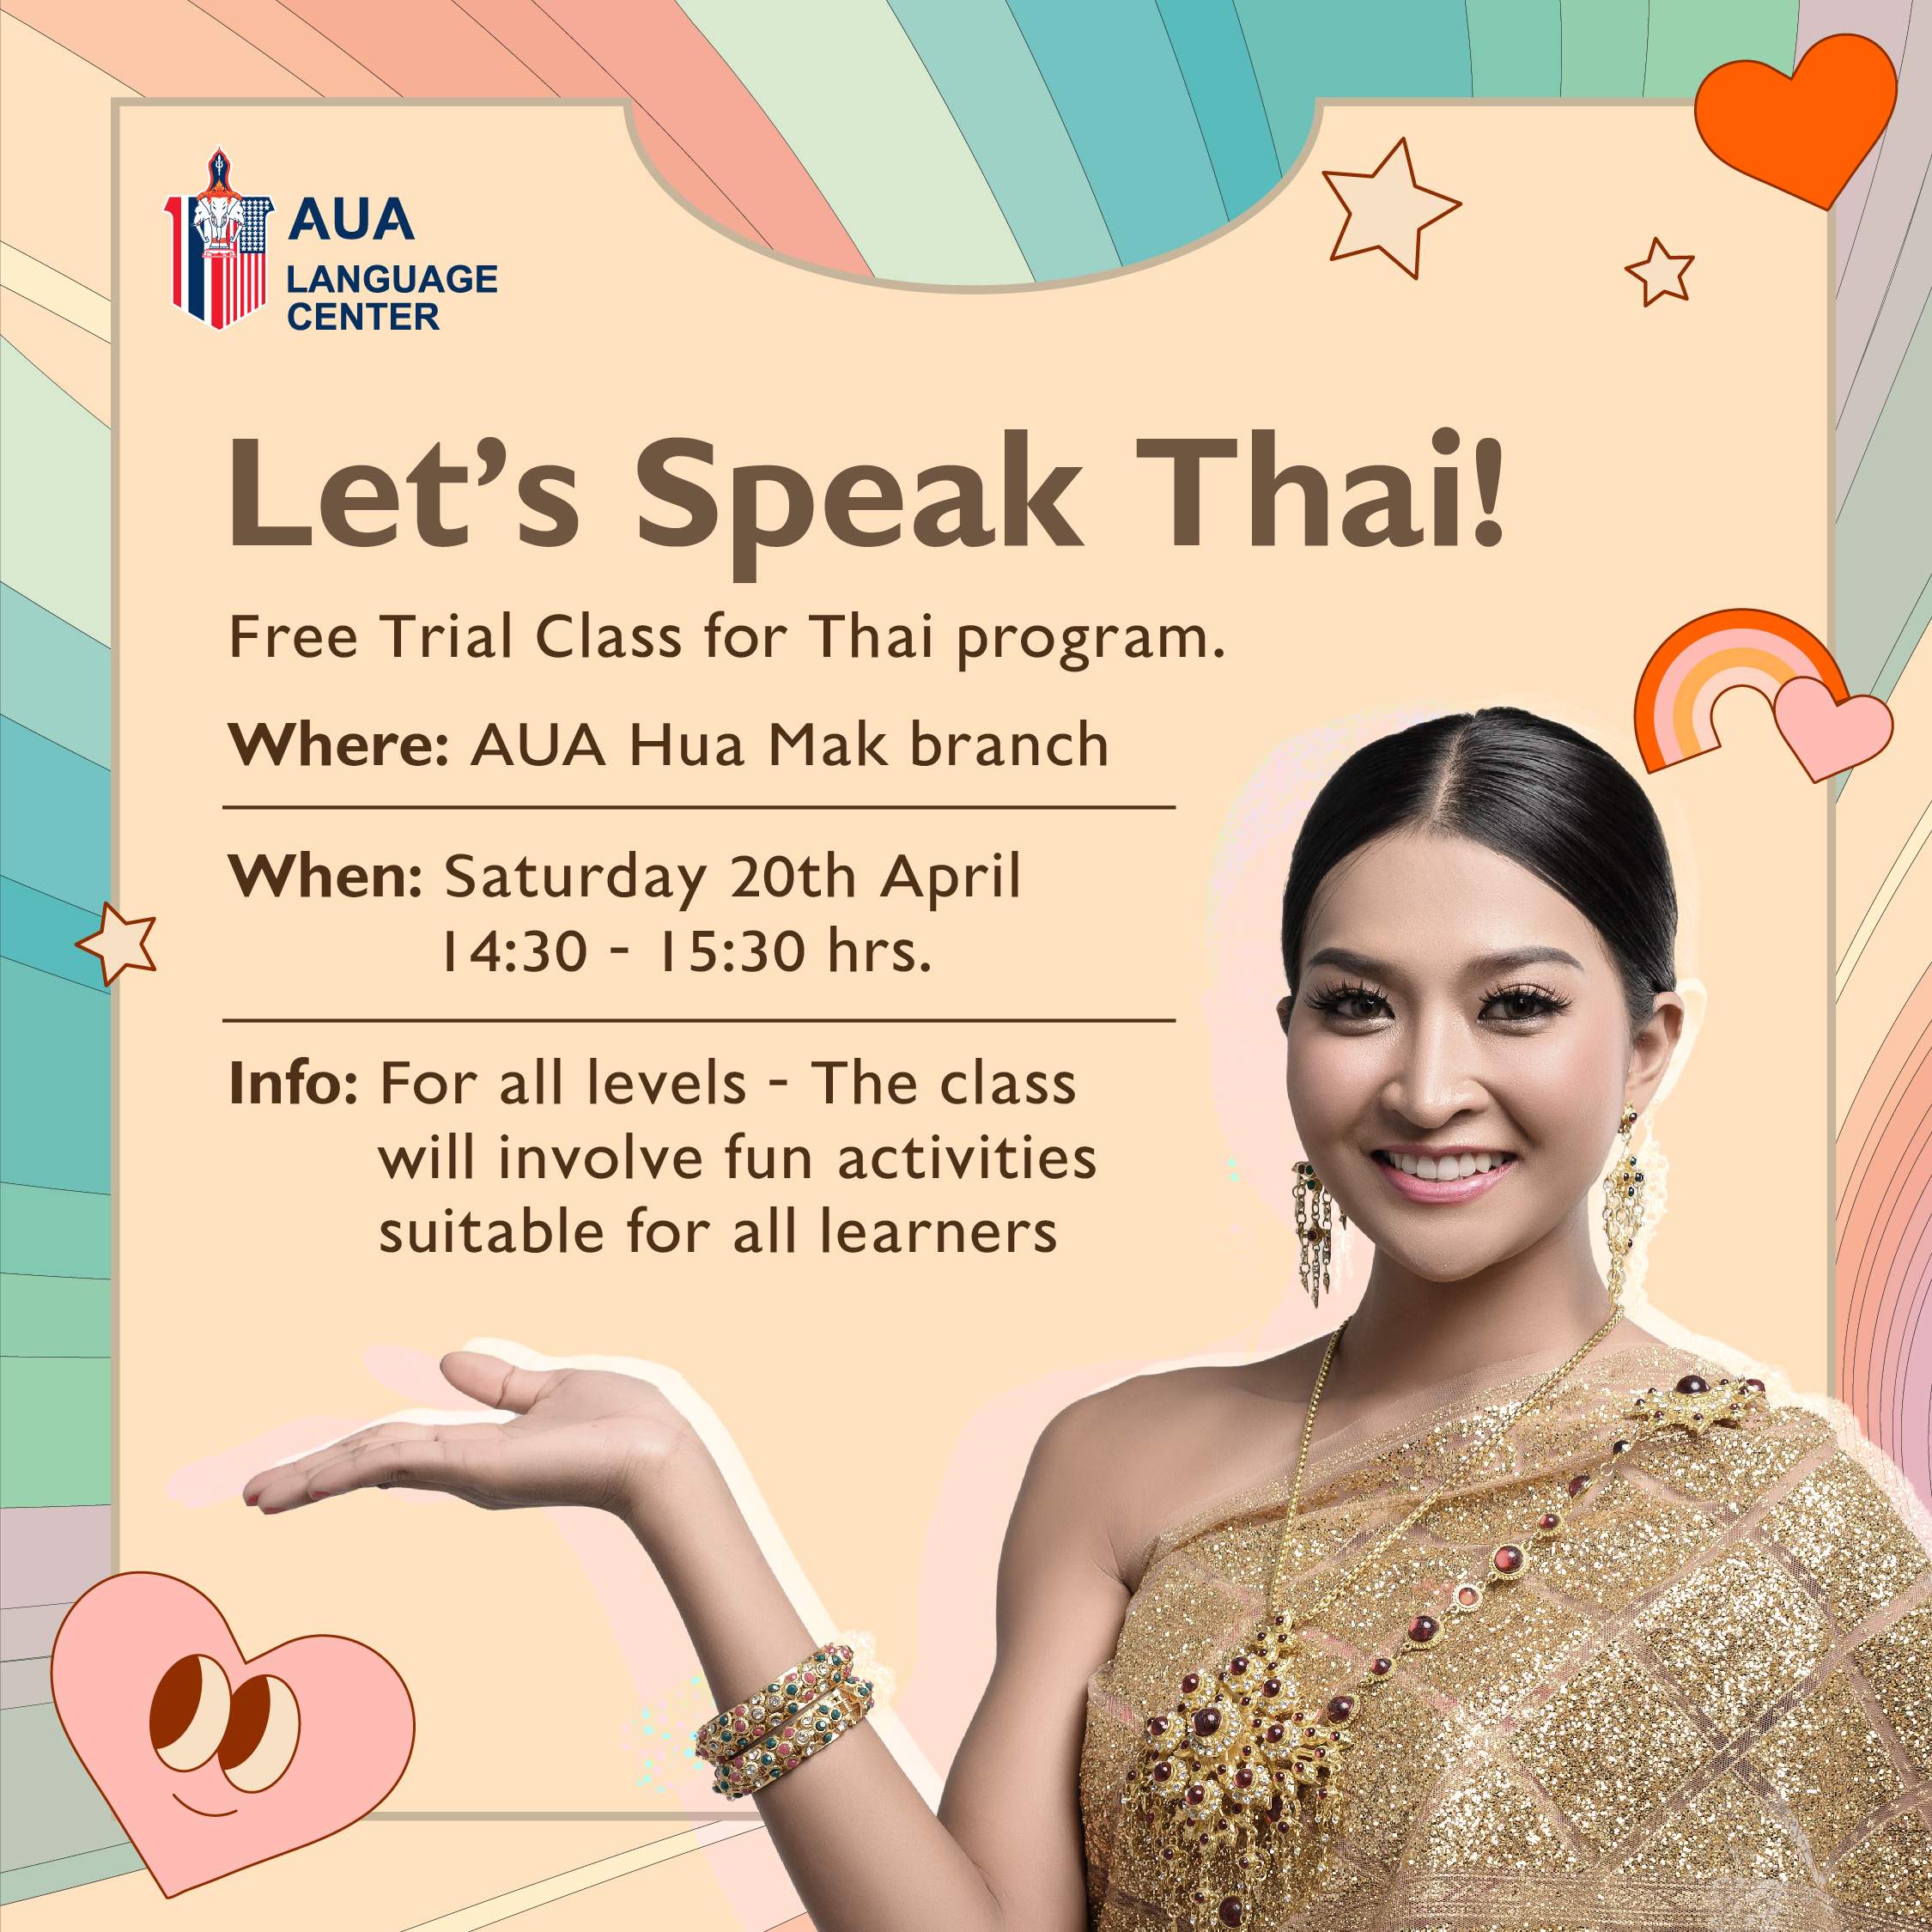 Free Trial Class for Thai Program